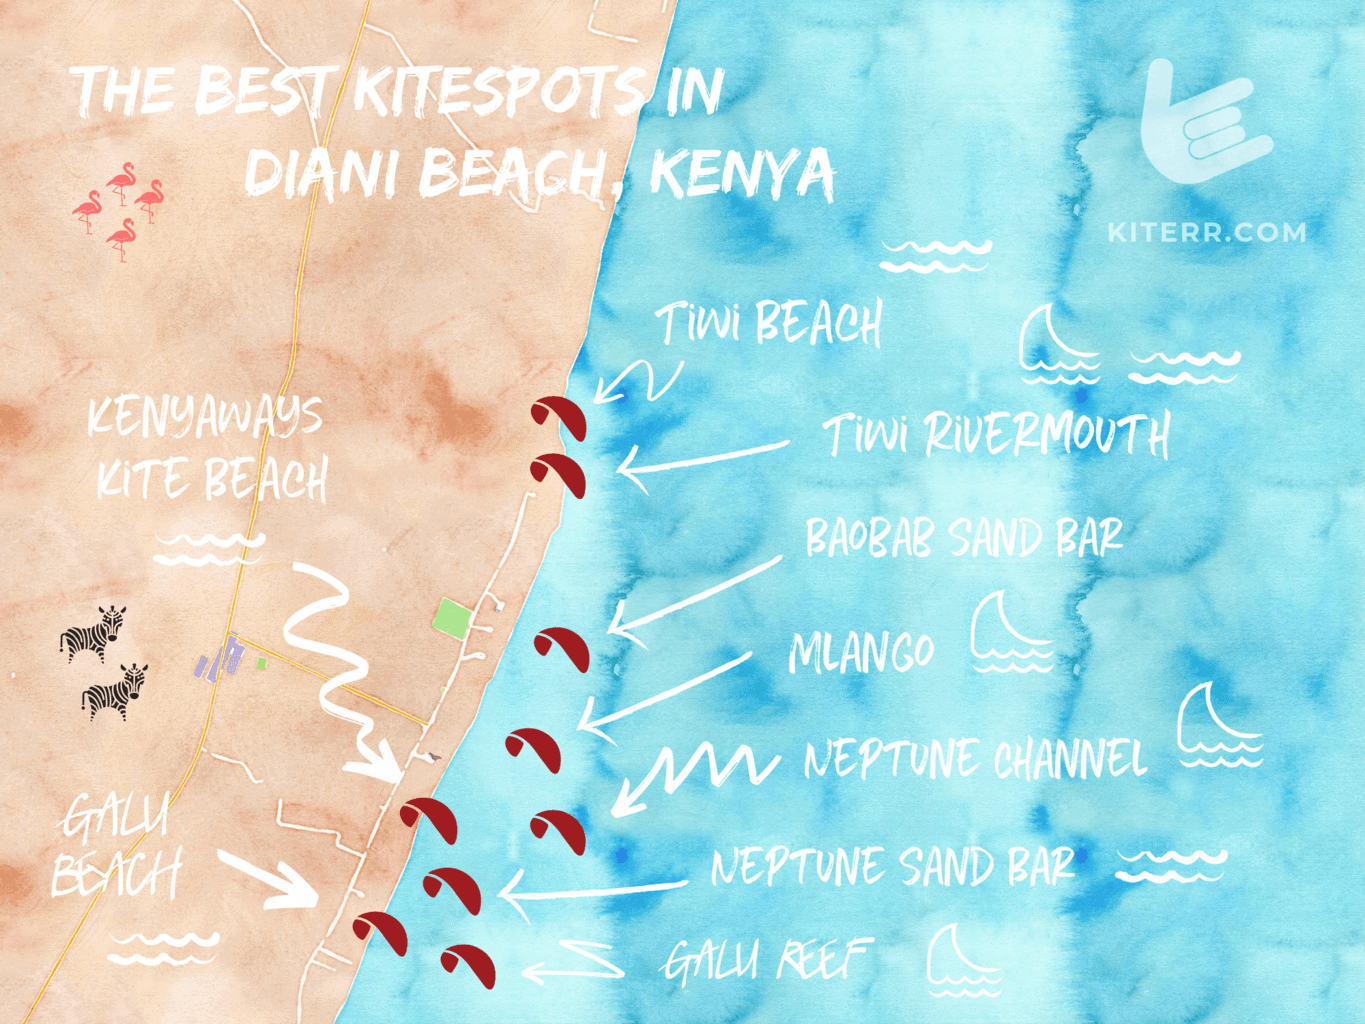 The best kitesurfing spots in Diani Beach, Kenya - Map & Guide // Kiterr.com